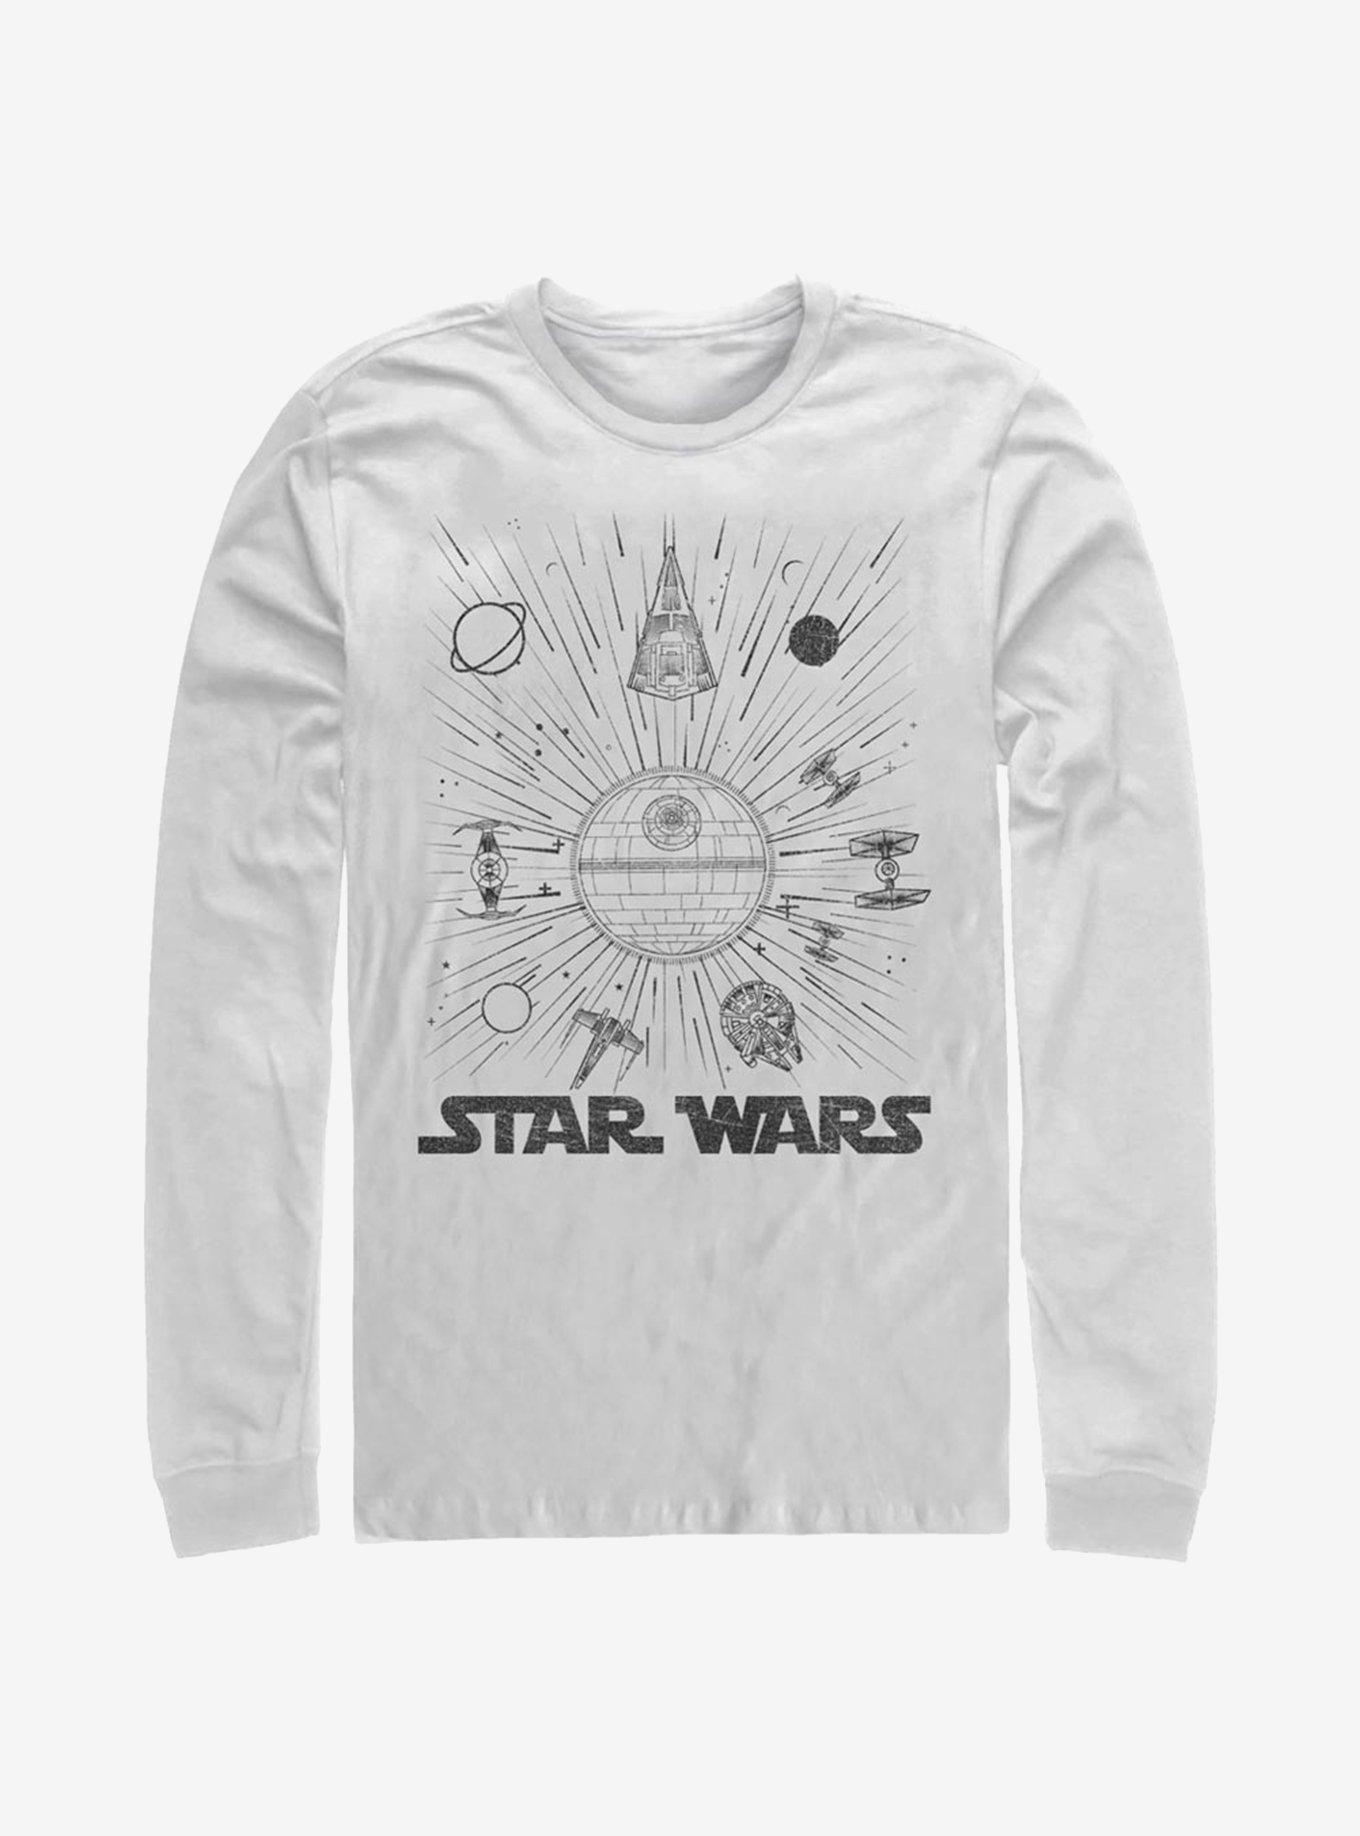 Star Wars Ships Burst Long-Sleeve T-Shirt, WHITE, hi-res